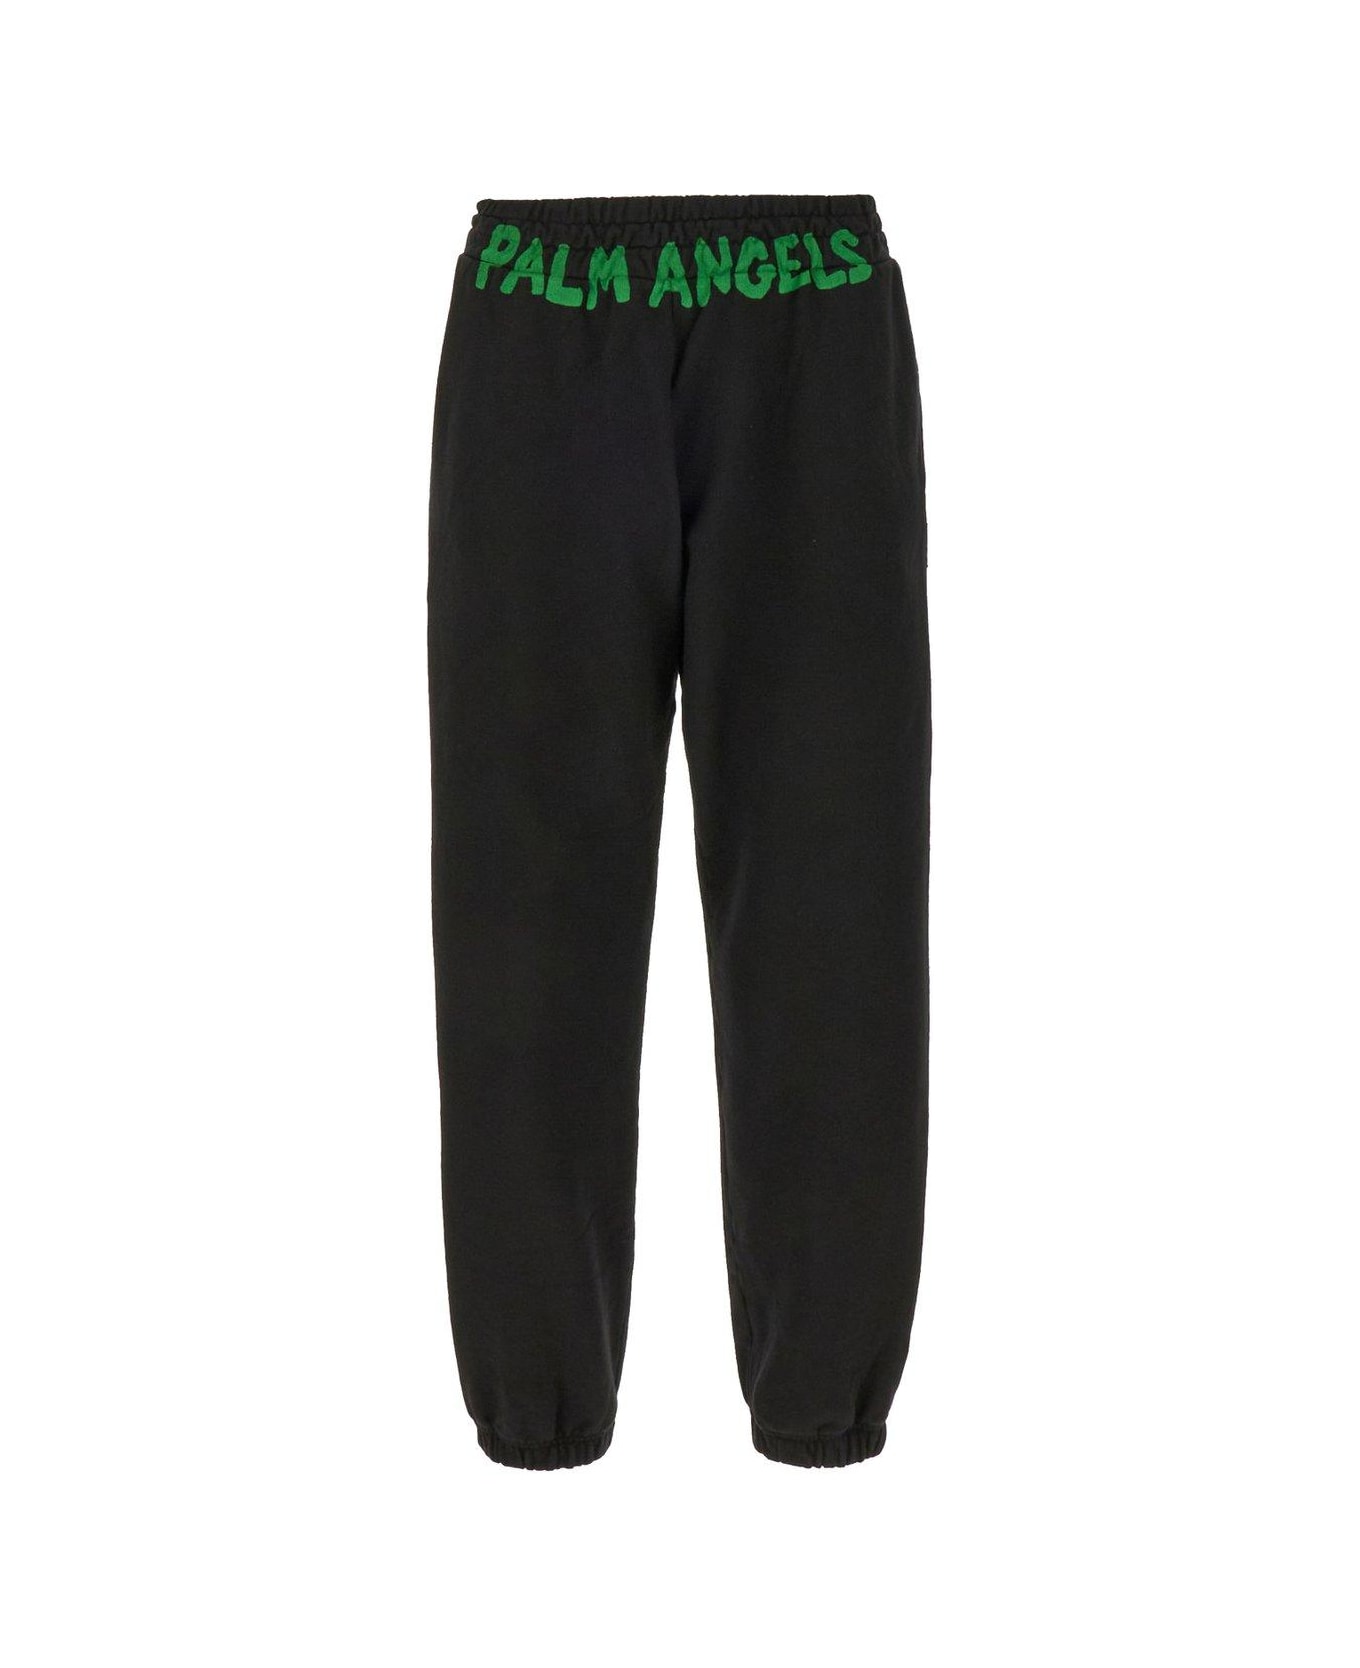 Palm Angels Logo-printed Elasticated Waist Track Pants - Black green